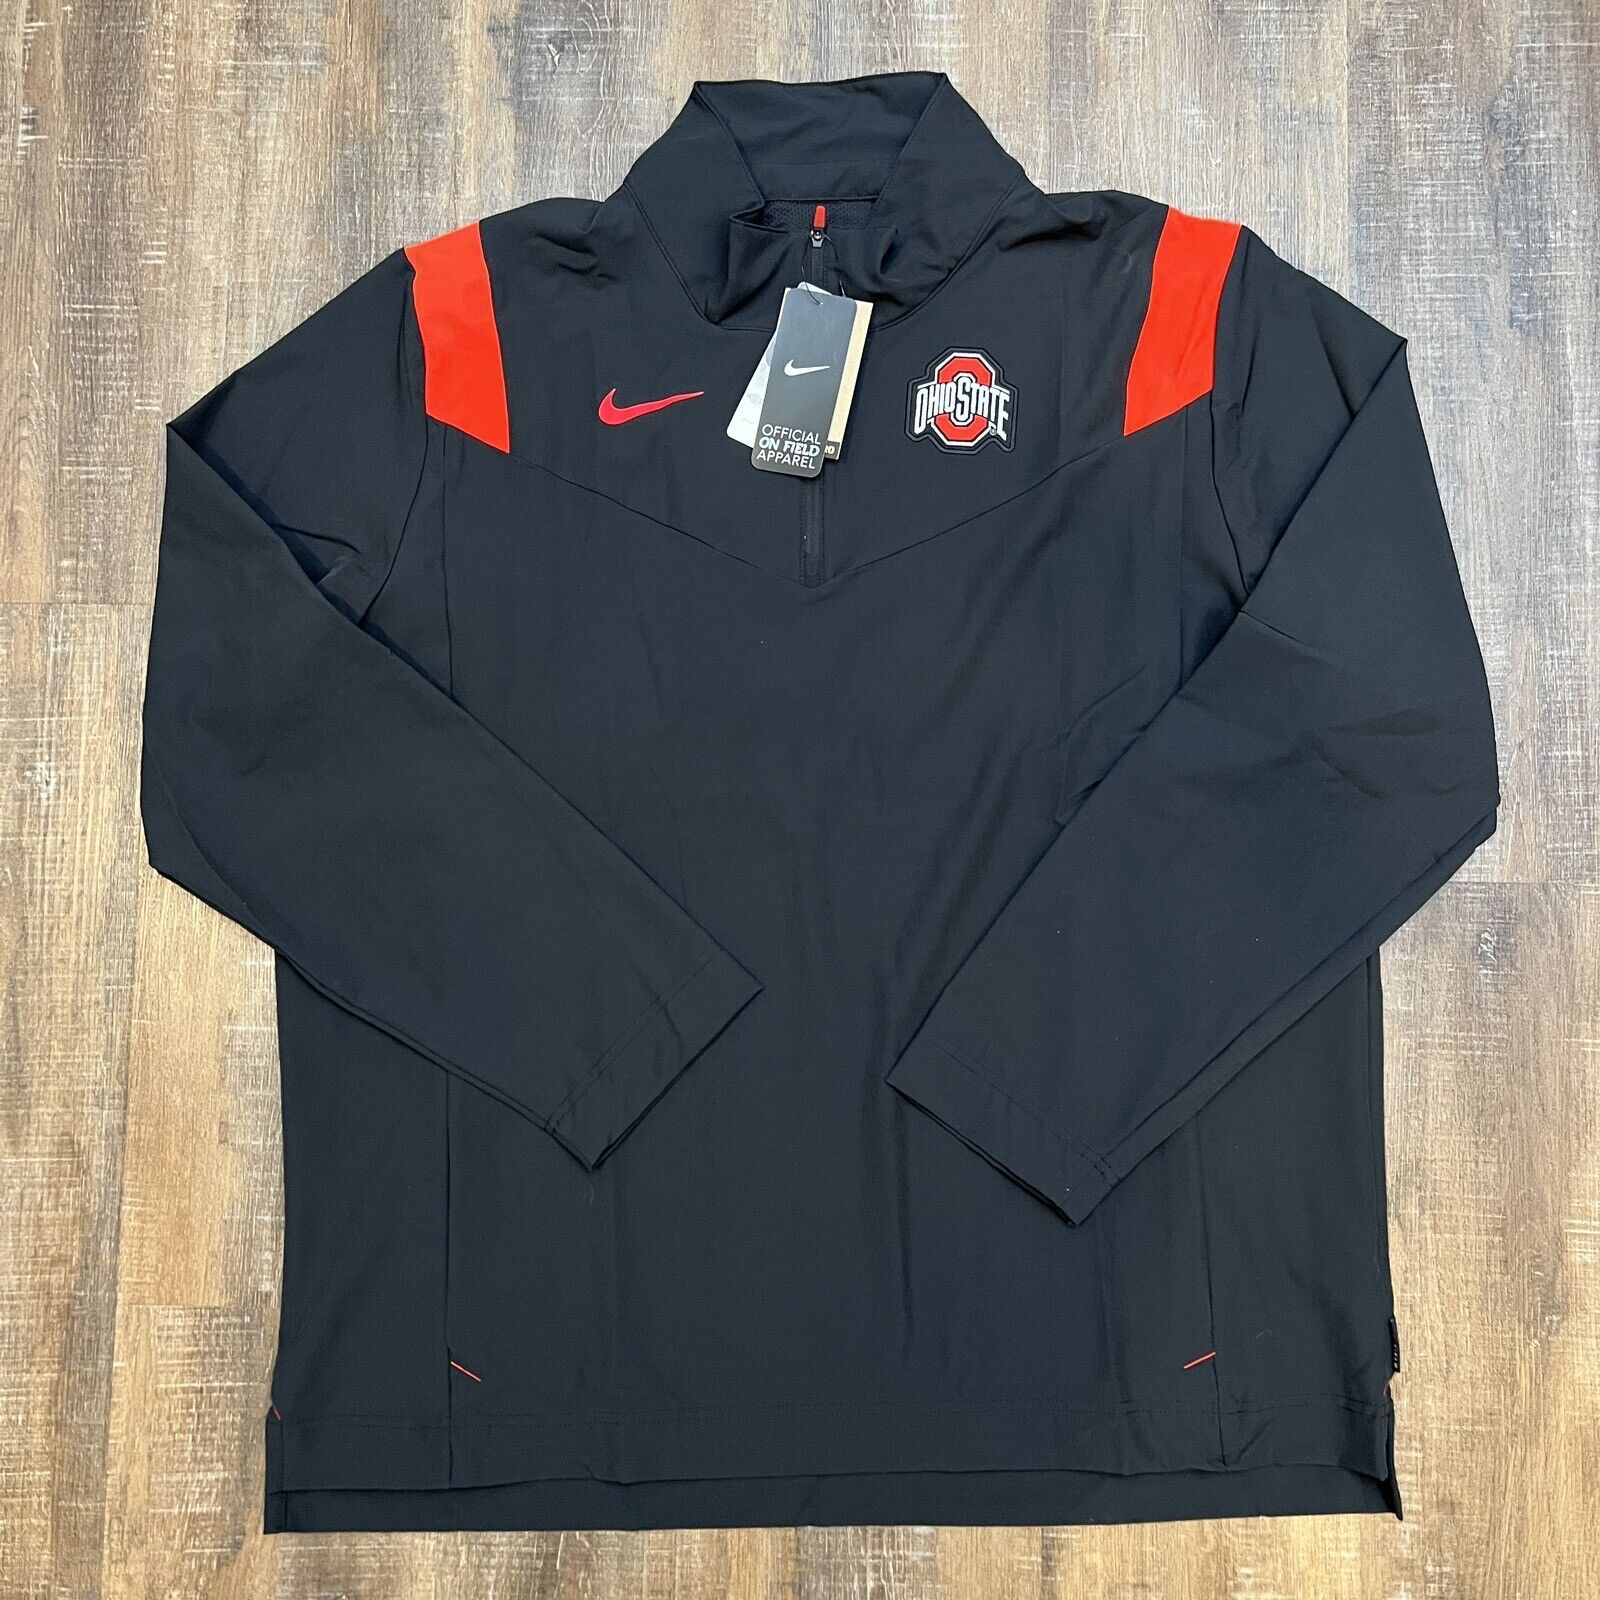 Nike OSU Ohio State Buckeyes 1/4 Zip On Field Size XL Mens Black Red Jacket $85